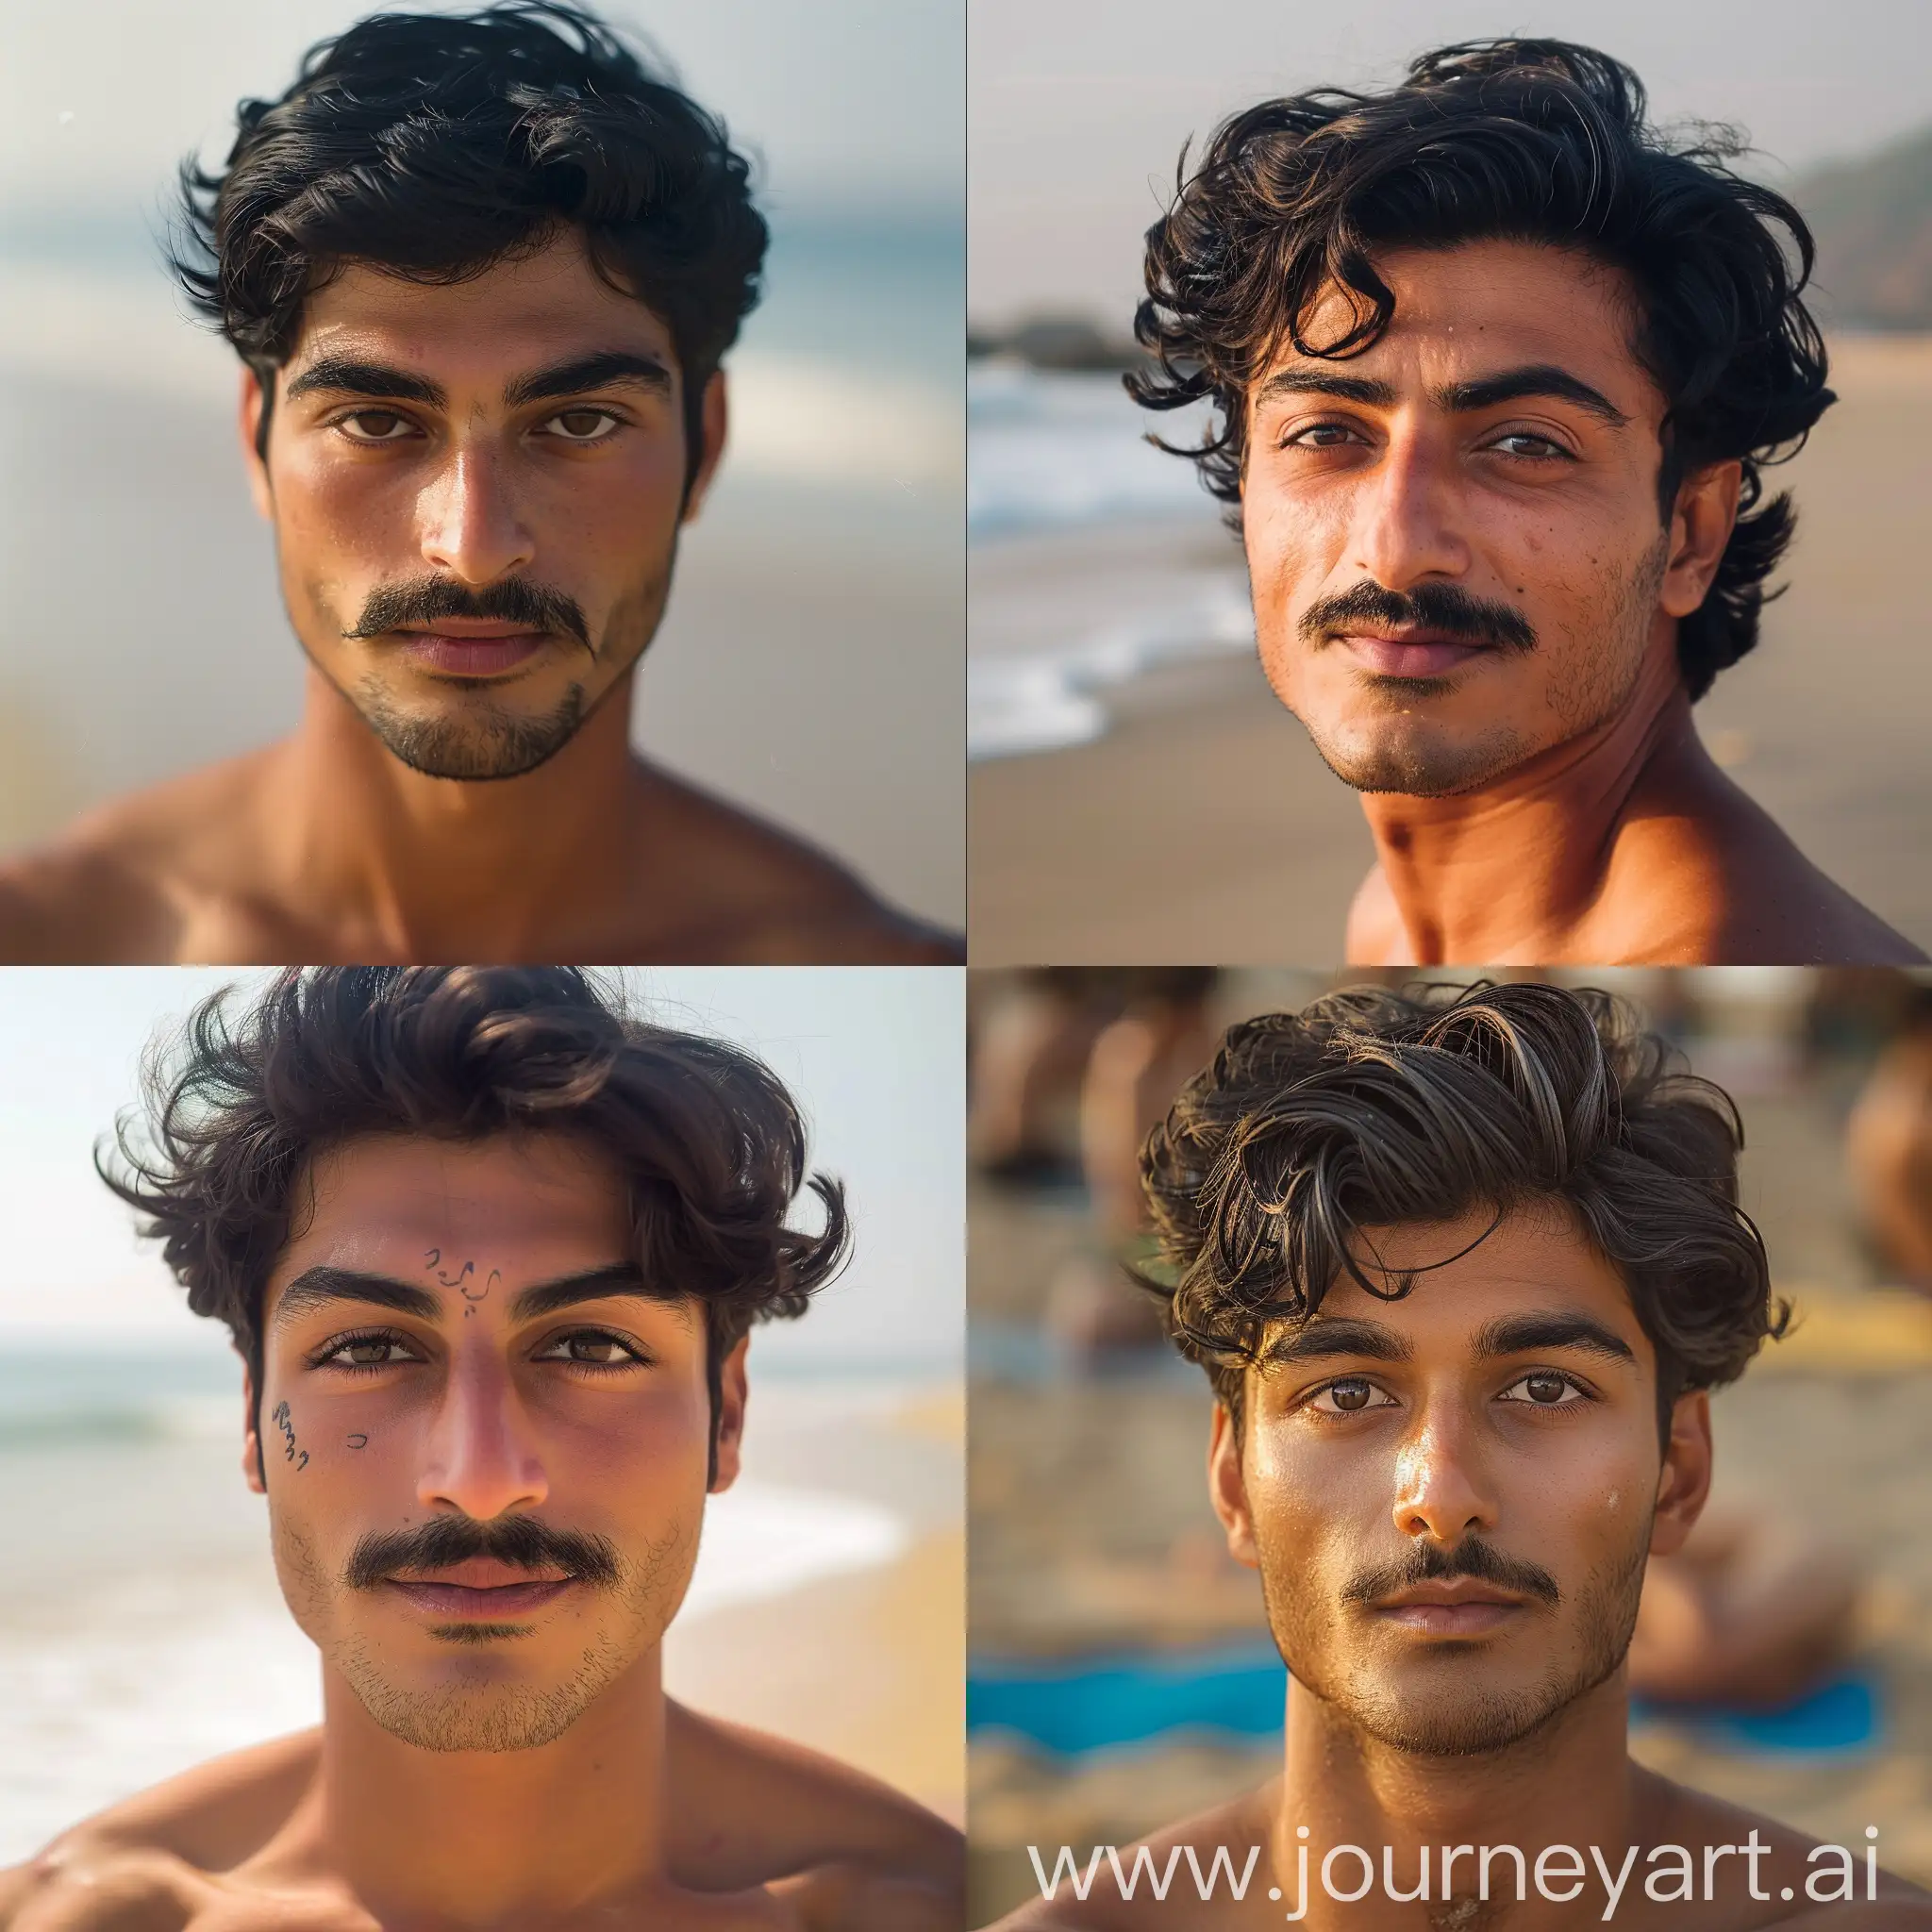 Tanned-Iranian-Man-Practicing-Yoga-on-Goa-Beach